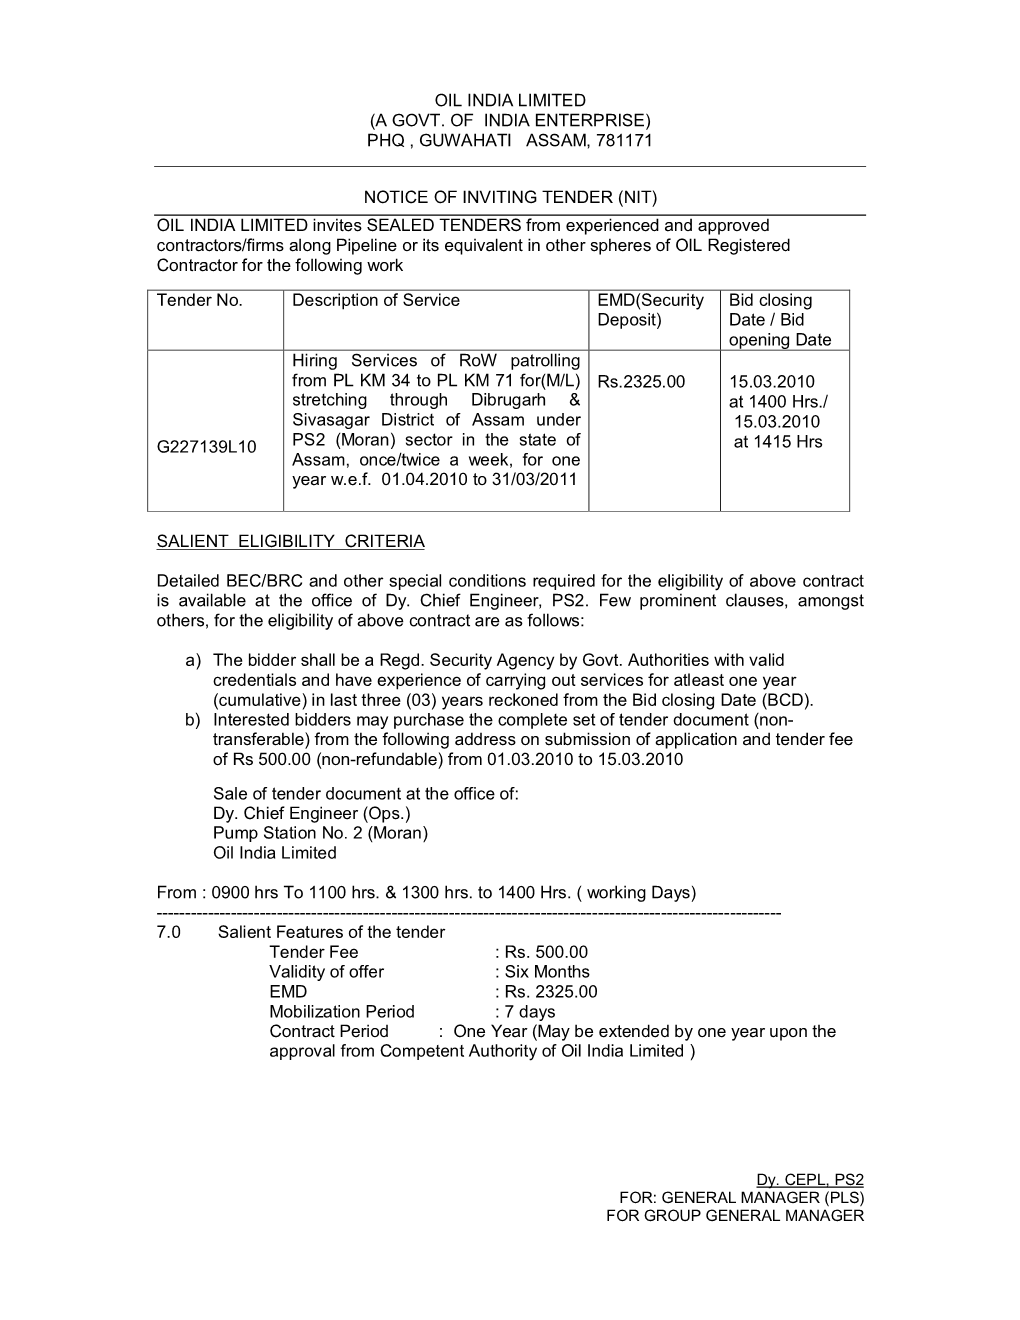 Phq , Guwahati Assam, 781171 Notice of Inviting Tender